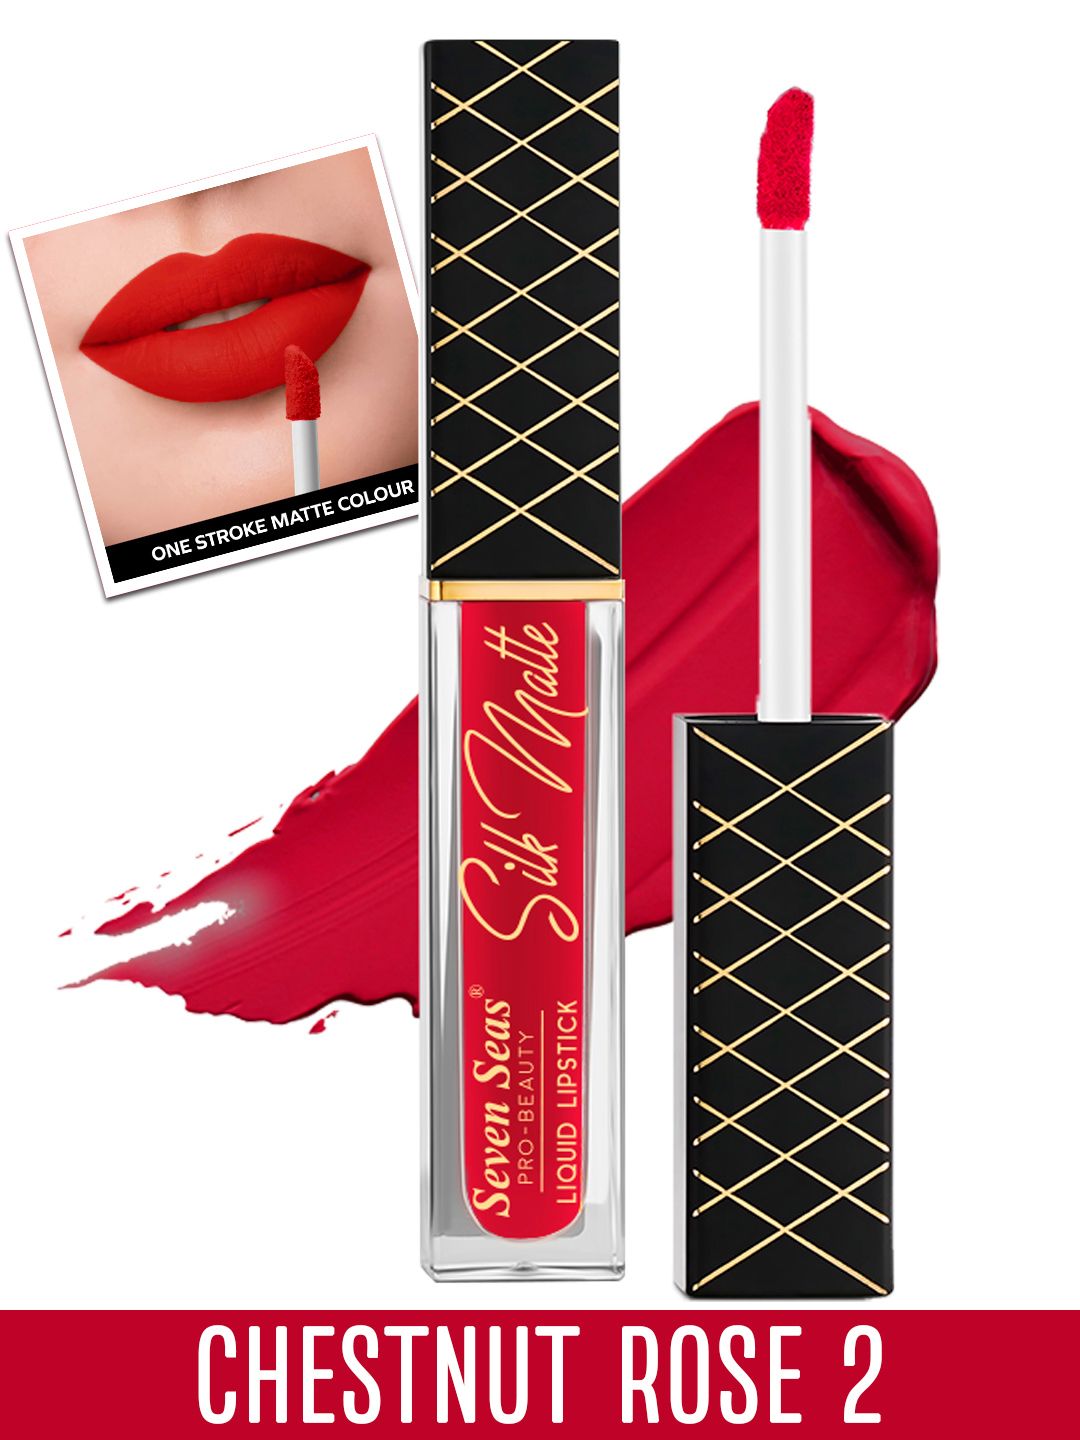 Seven Seas Transfer Proof Silk Matte Liquid Lipstick 8 g - Chestnut Rose 2 Price in India